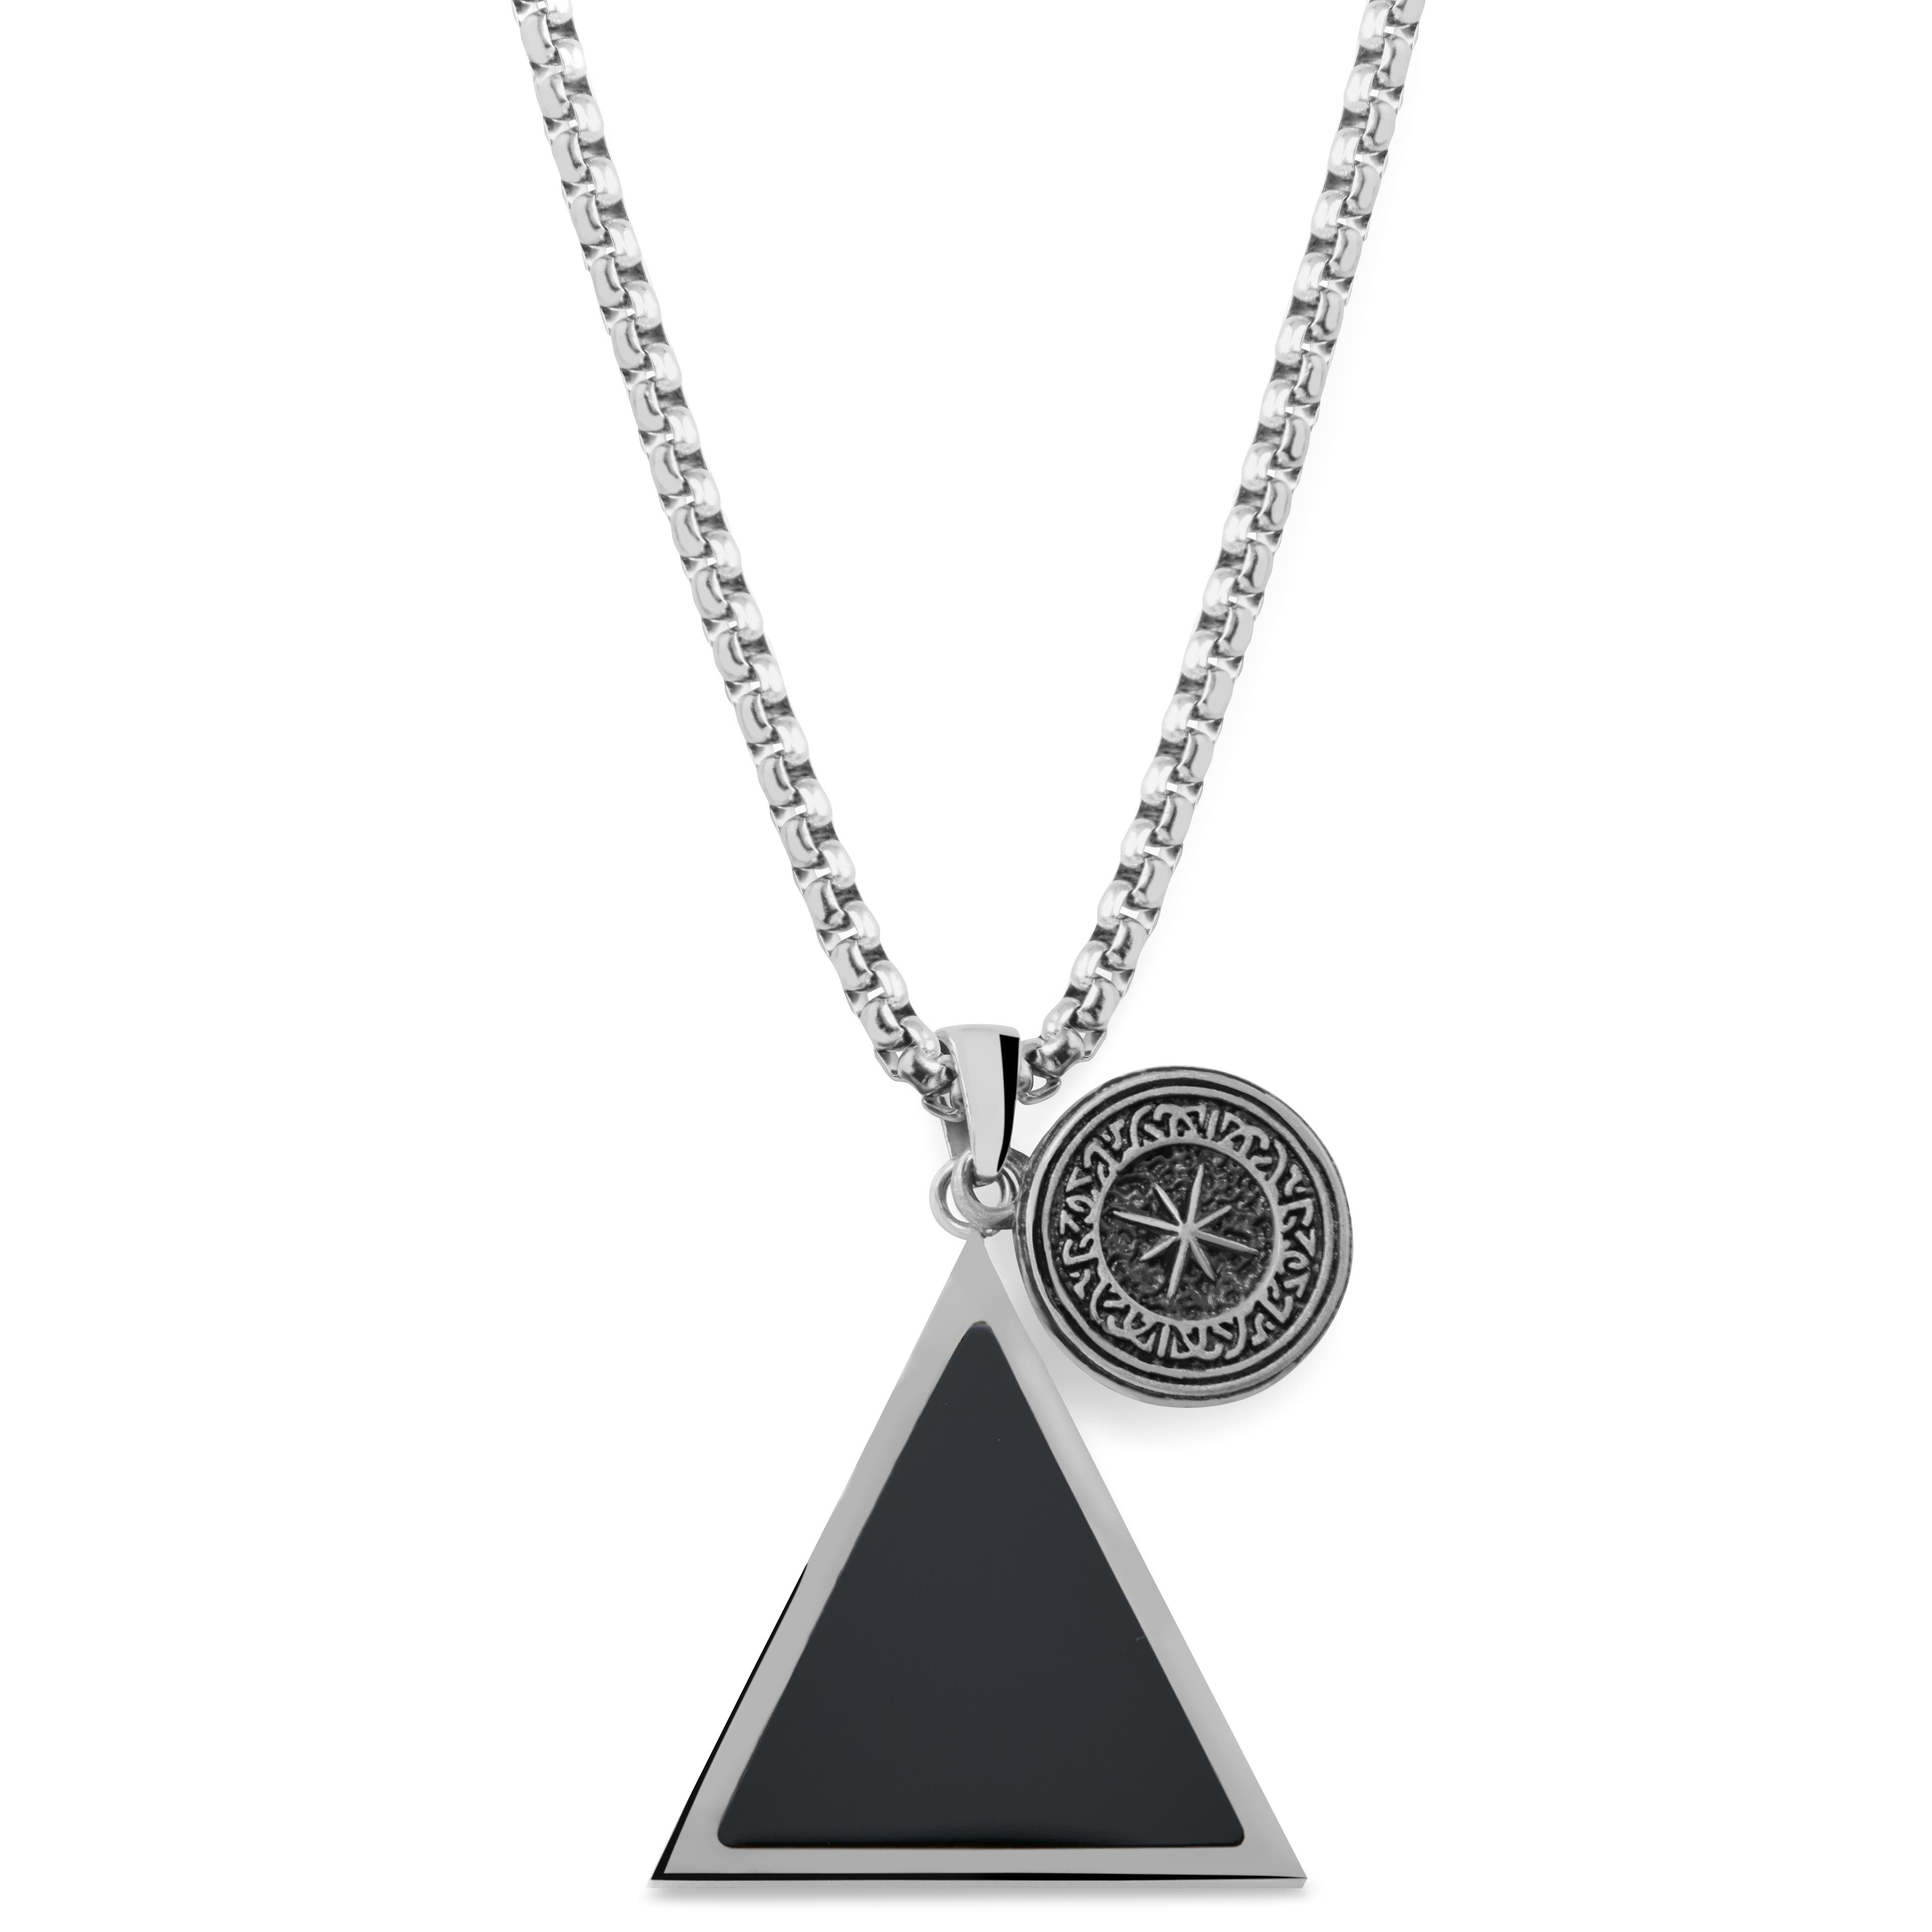 Orisun | Silver-Tone Stainless Steel Black Onyx Triangle Pendant Necklace